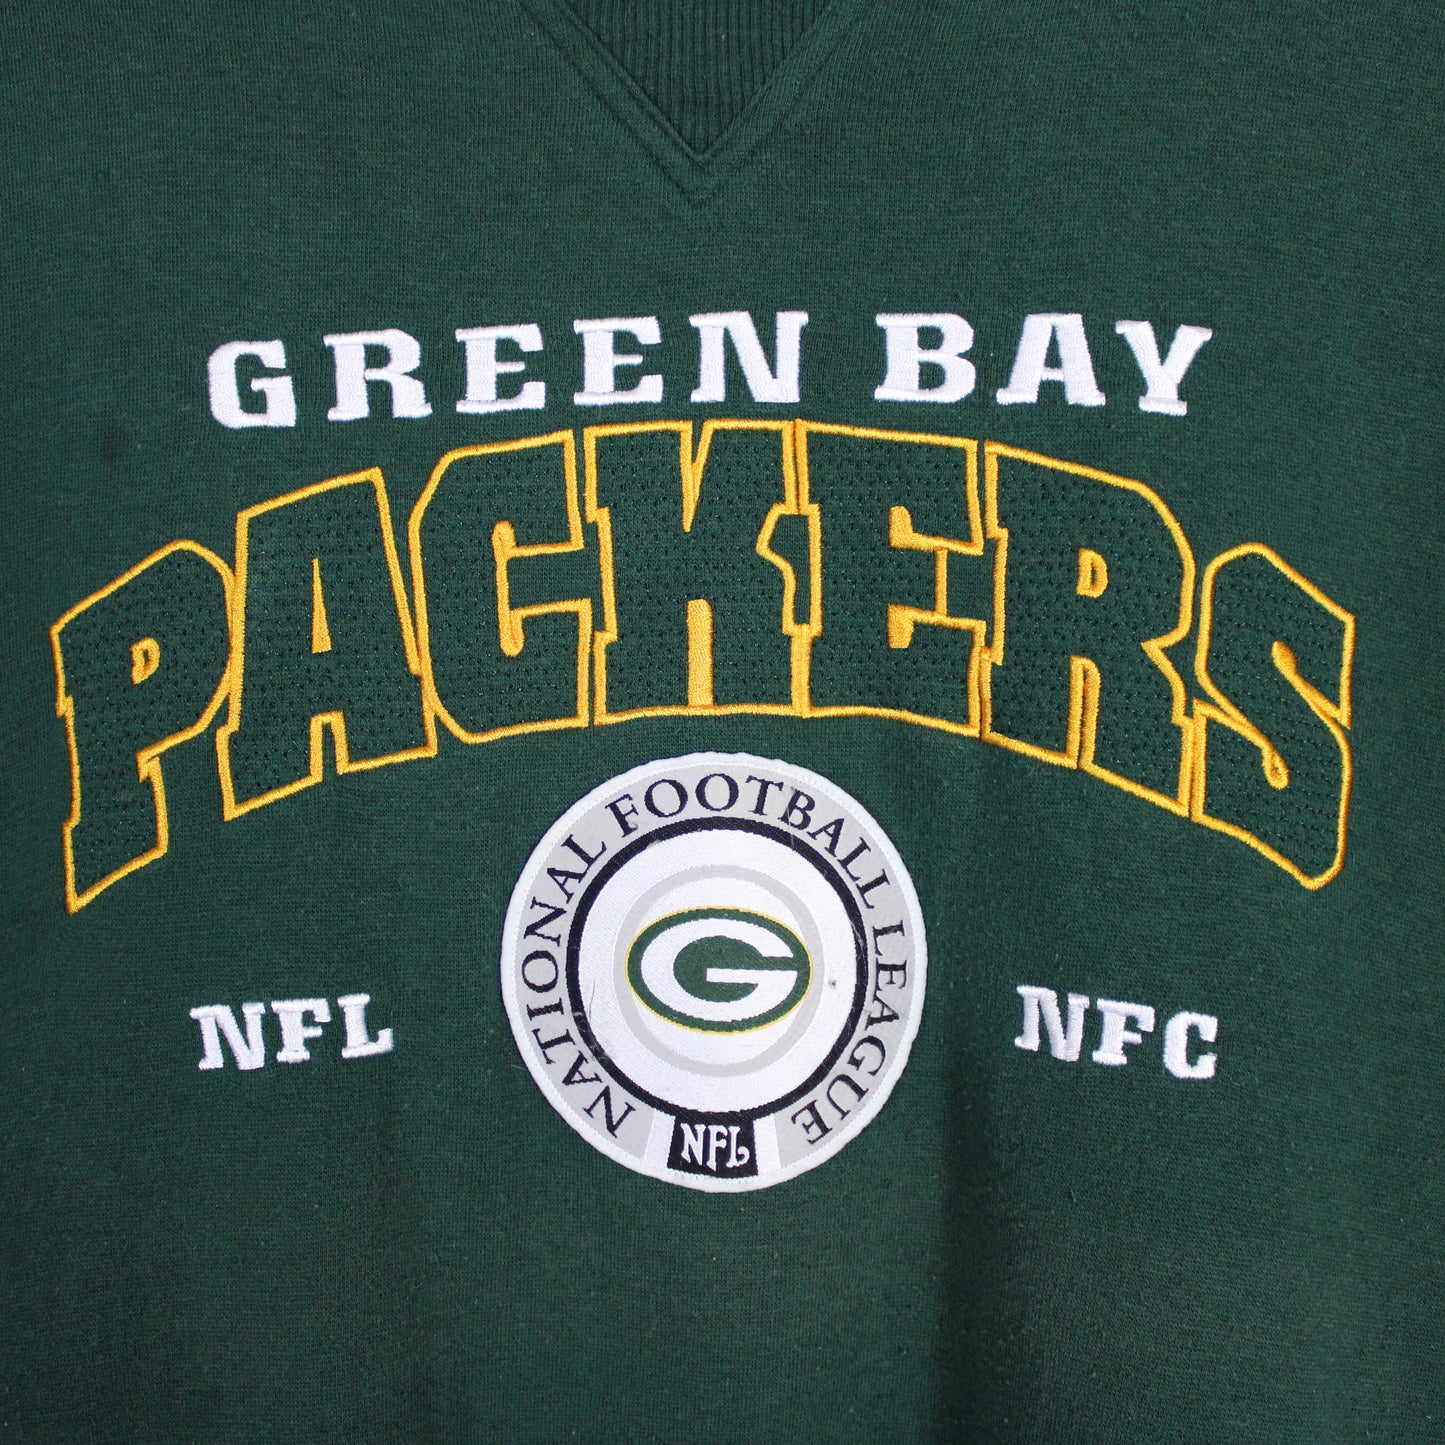 Vintage 90's Green Bay Packers NFL Sweatshirt - XL